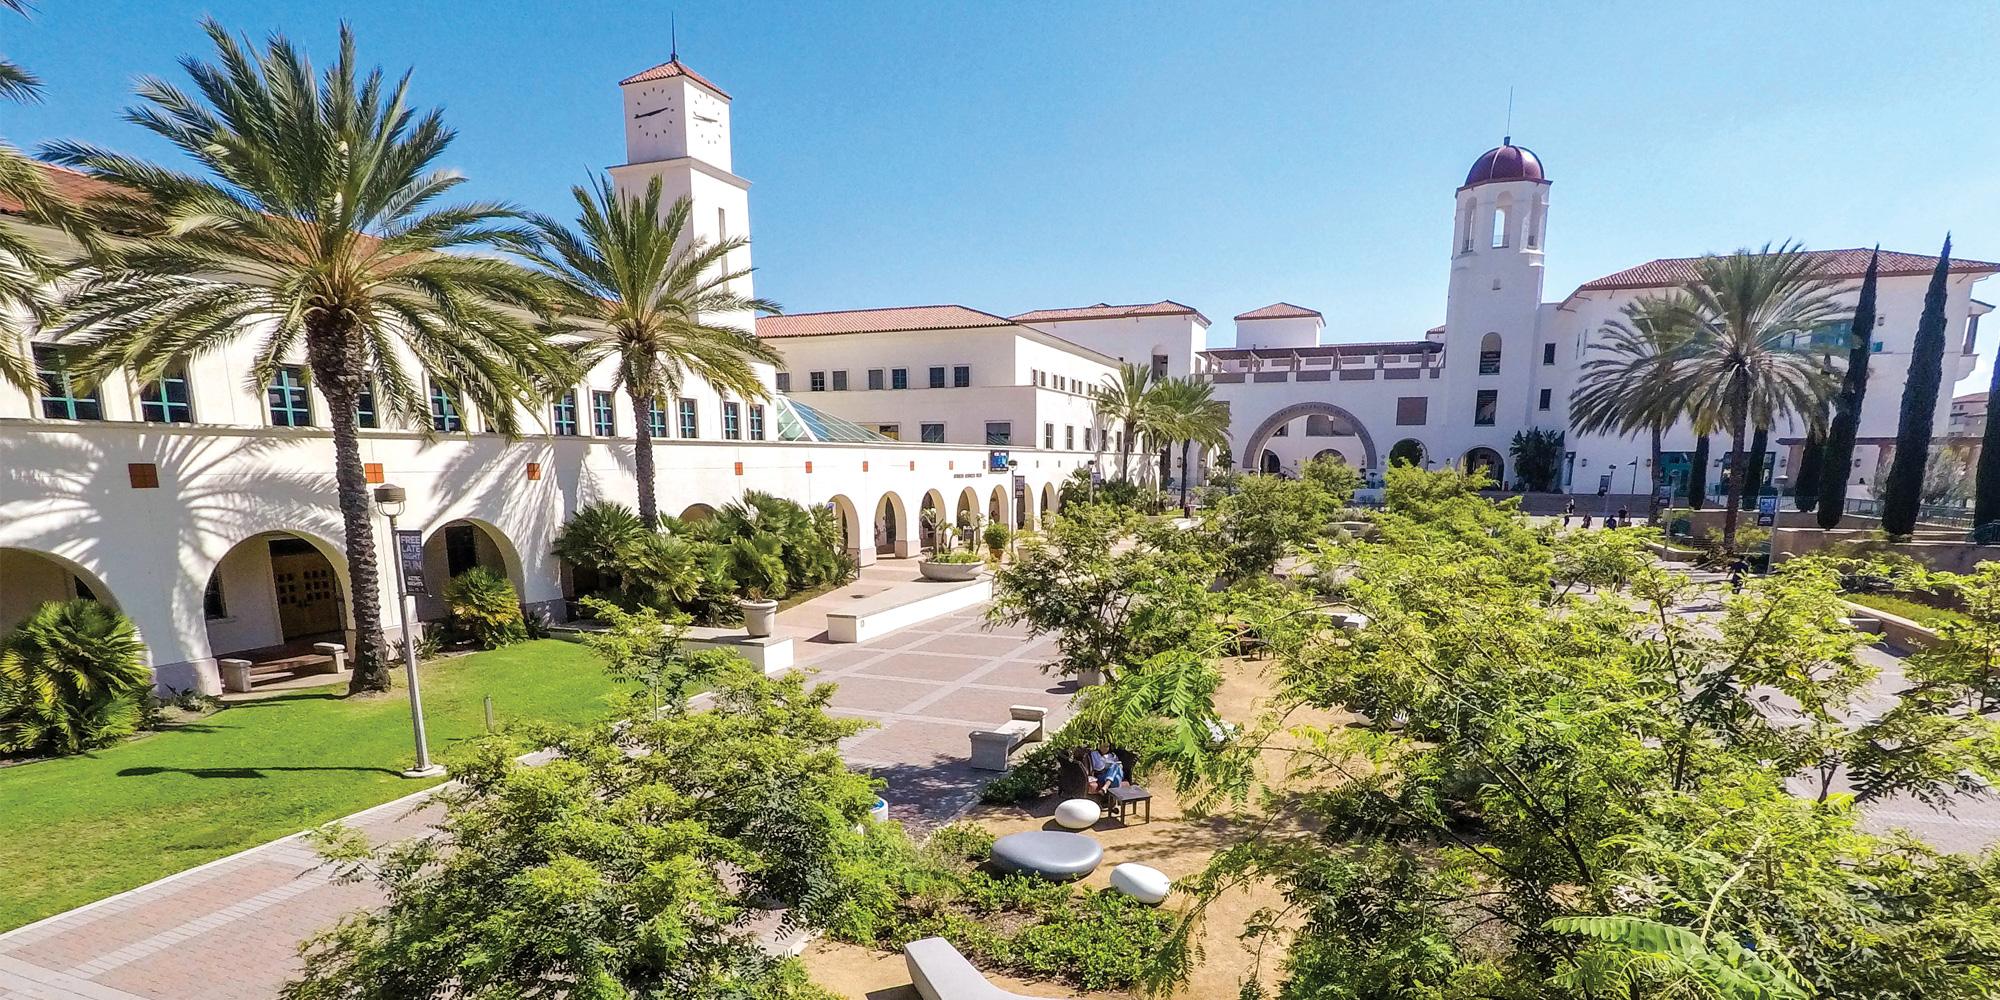 San Diego State University | SDSU Admission Requirements | CollegeVine